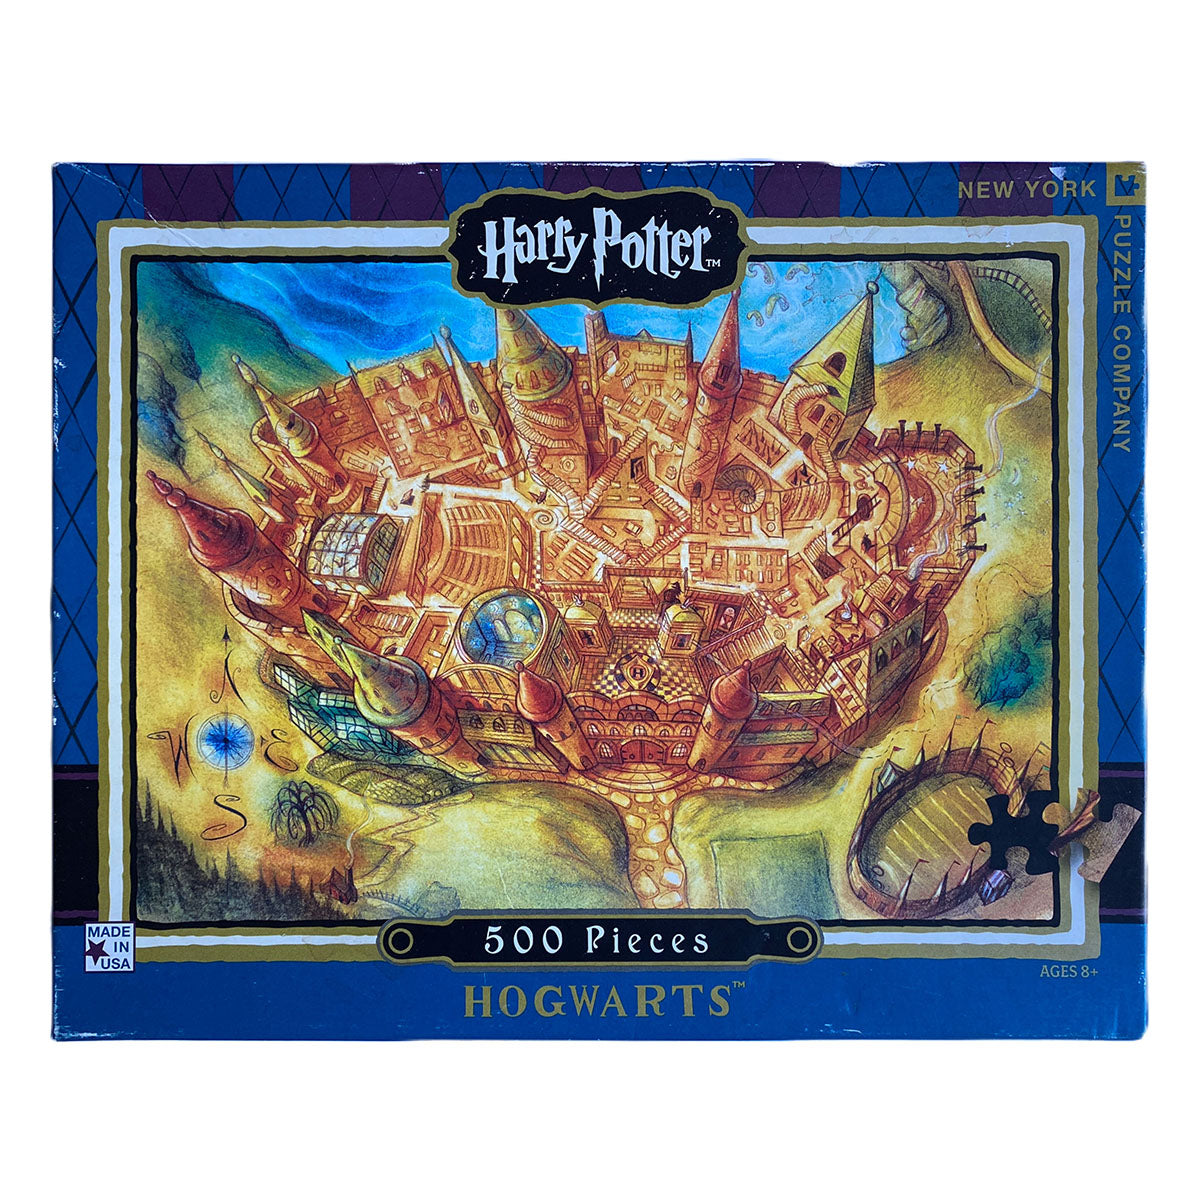 Photo of box of Hogwarts New York Puzzle Company puzzle.